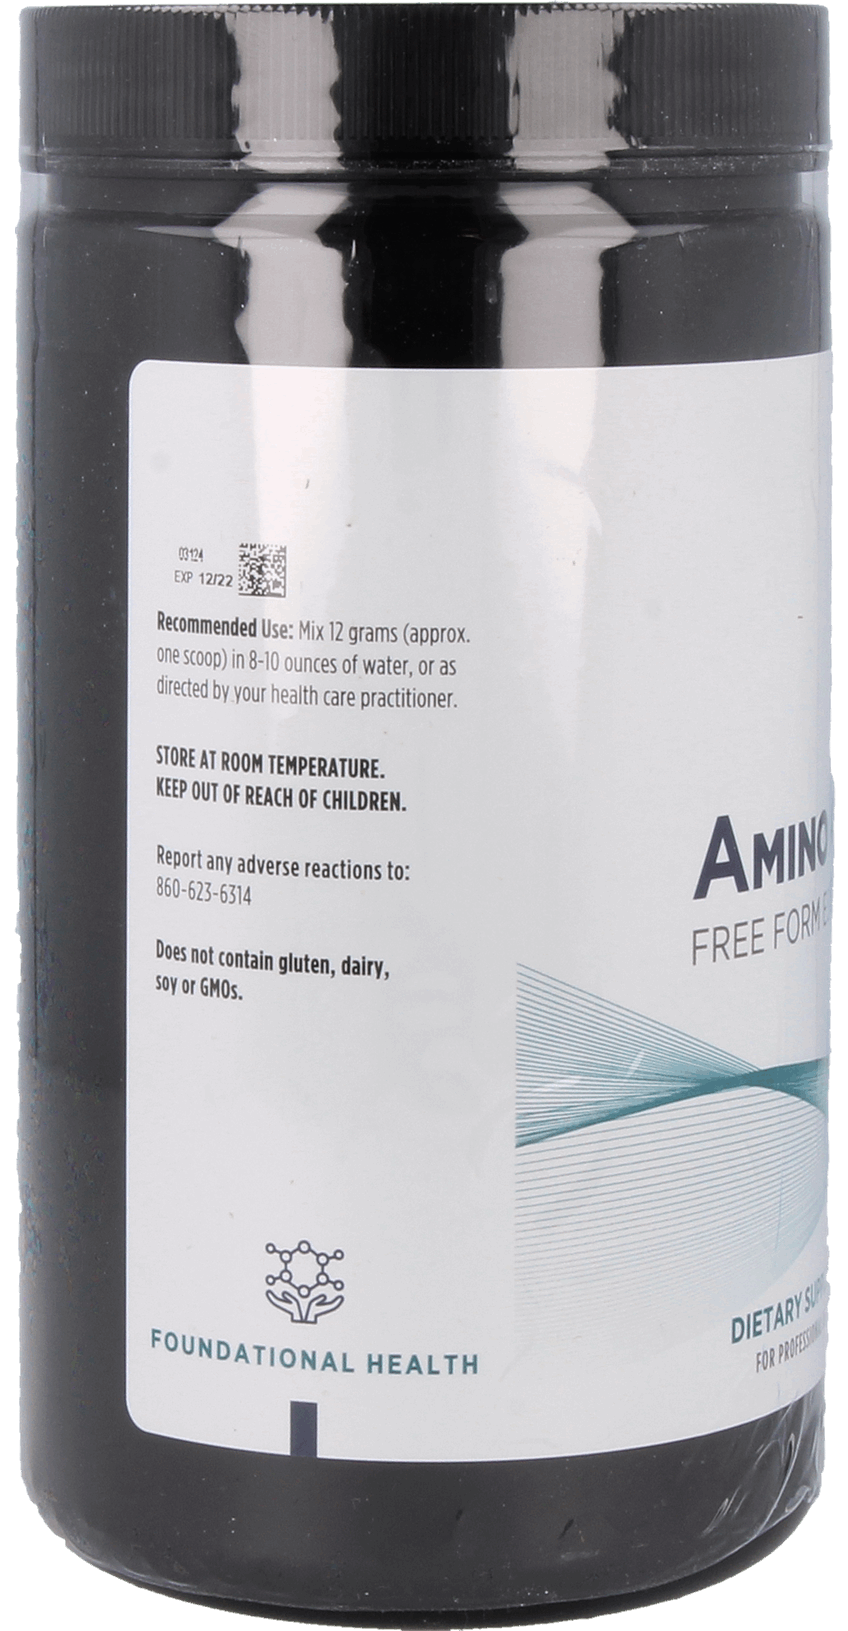 Amino Acid Supreme™ 